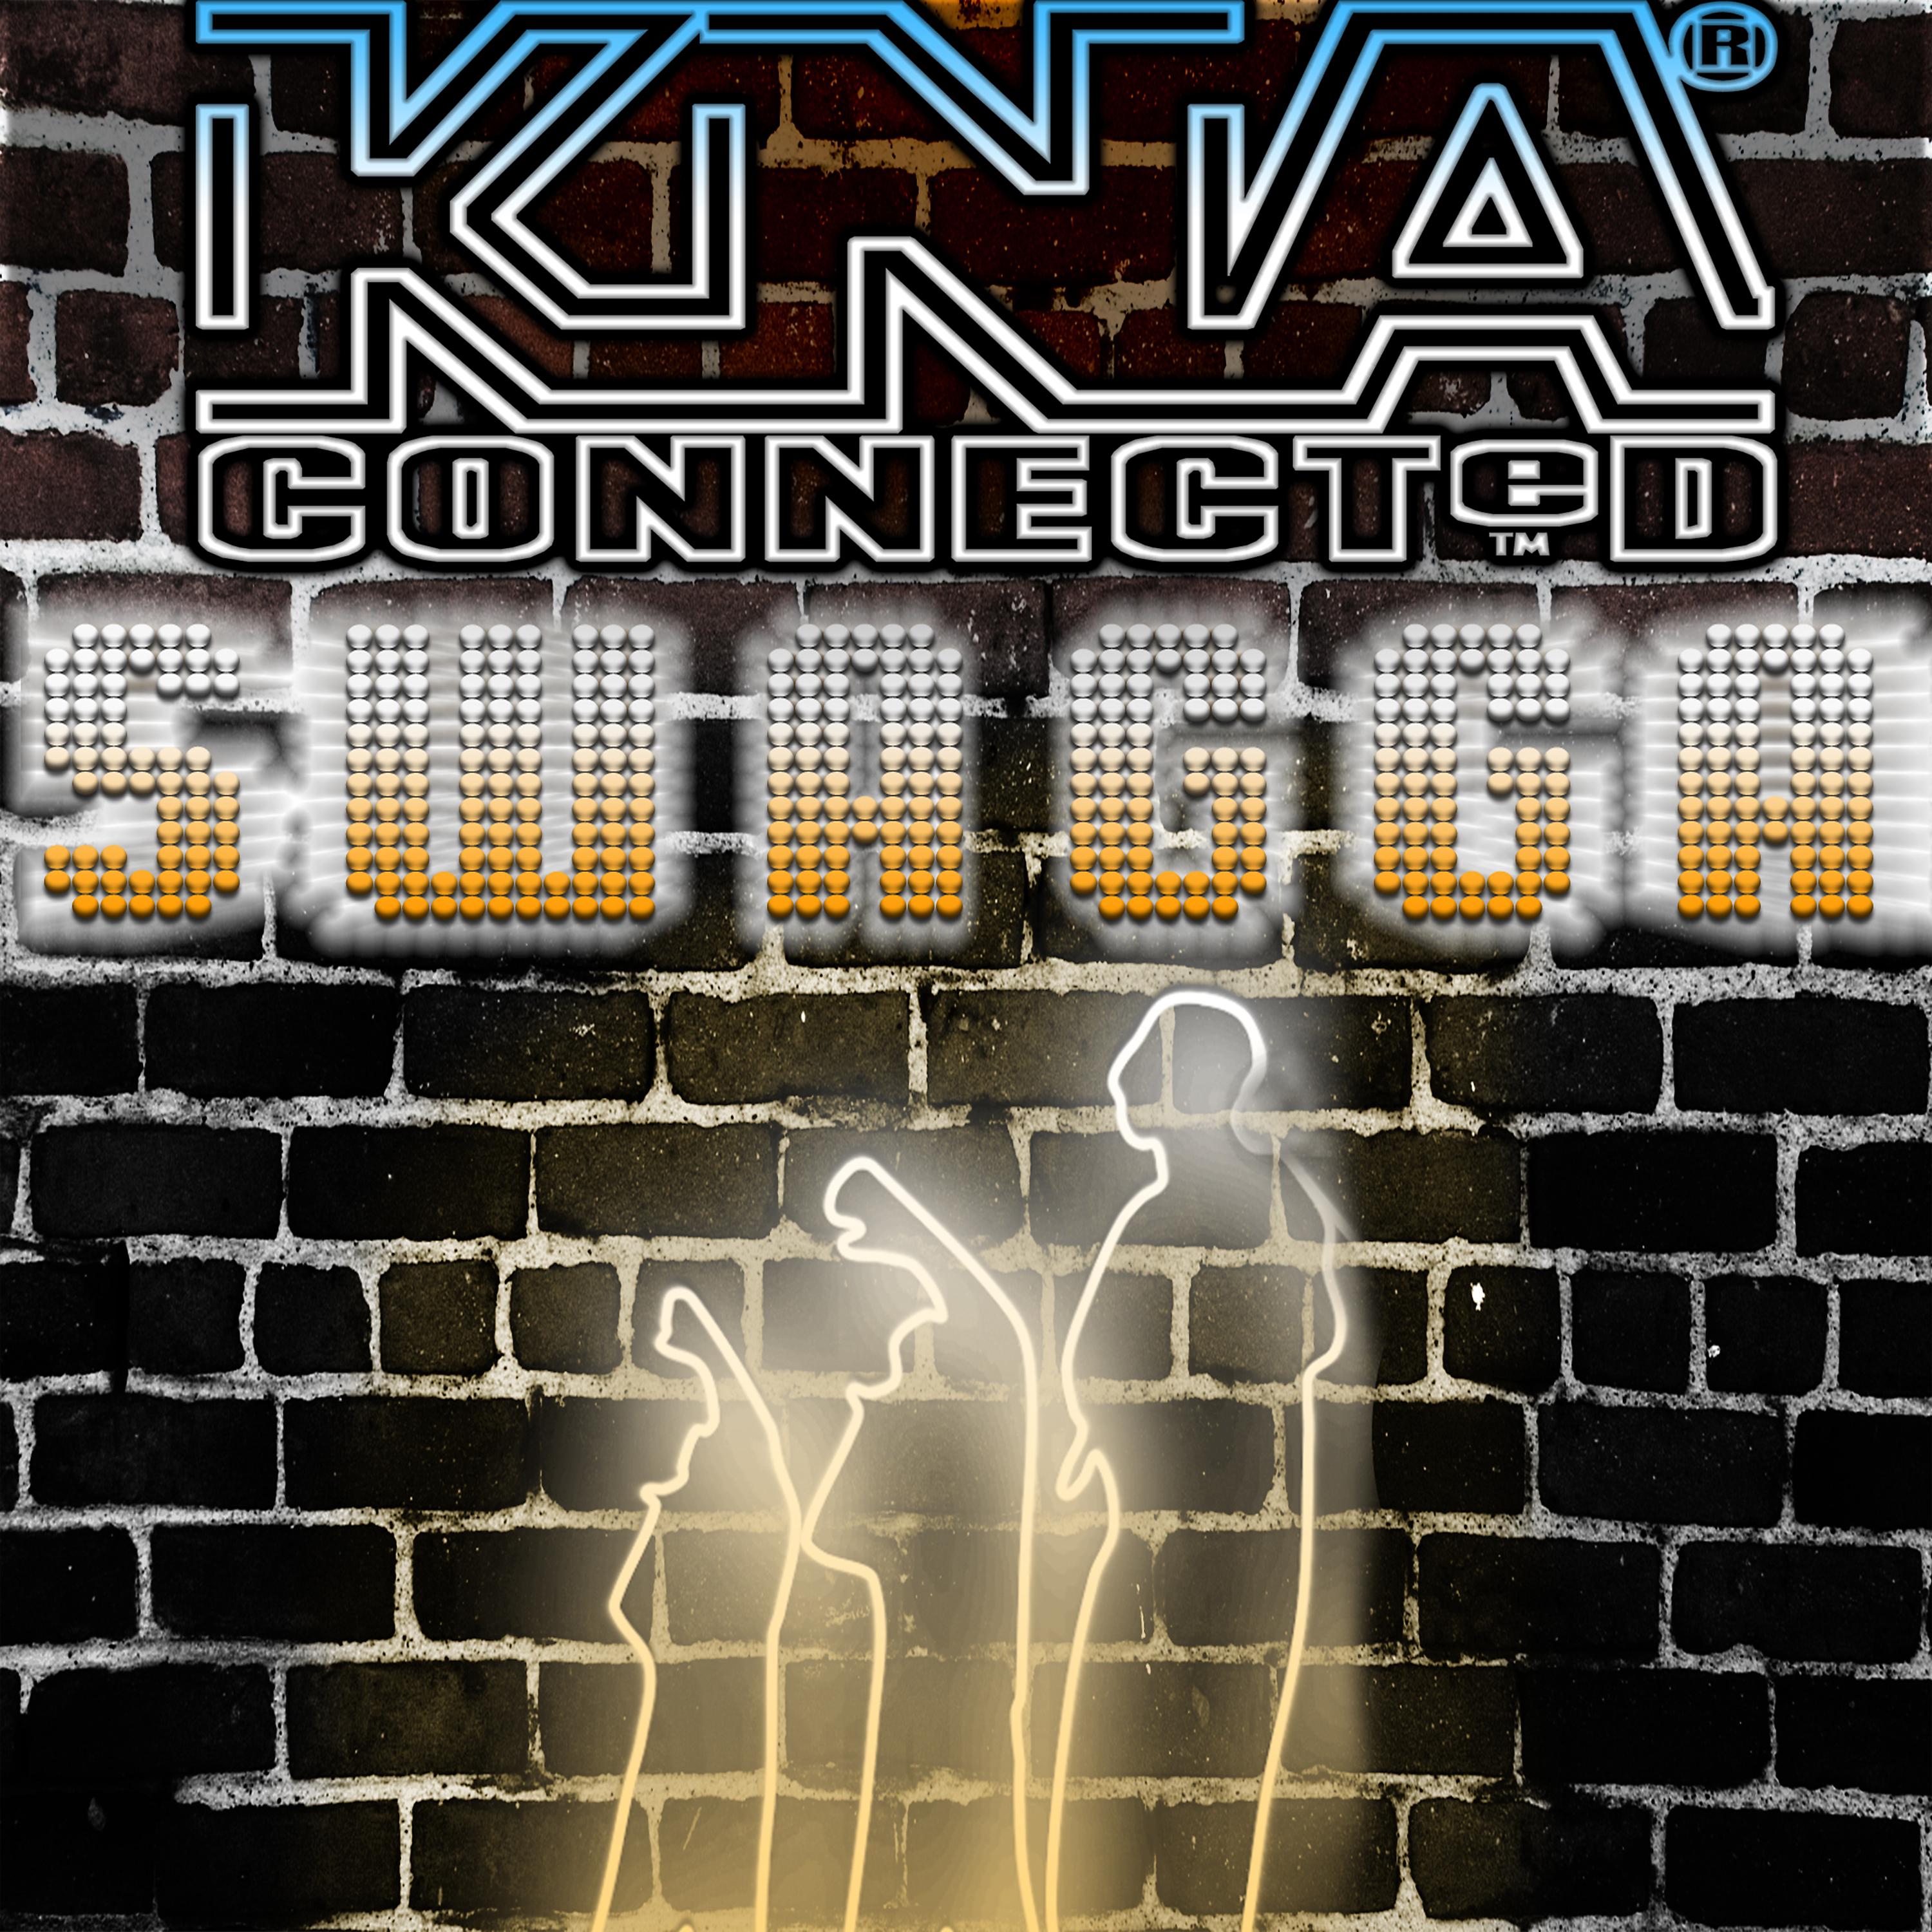 Постер альбома Swagga